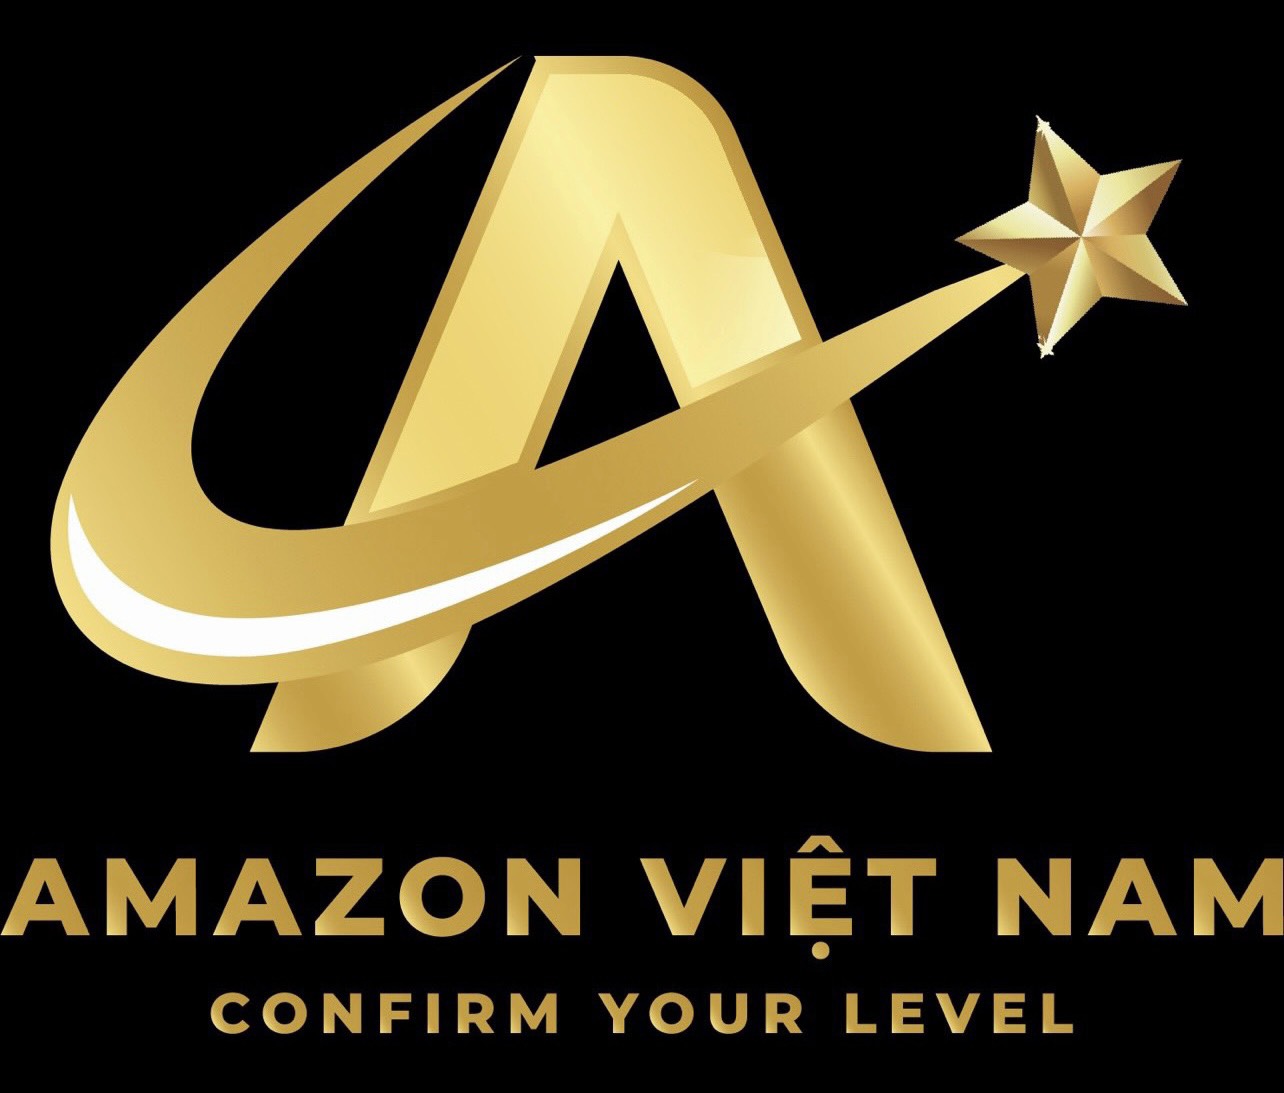 amazonvietnam.com.vn